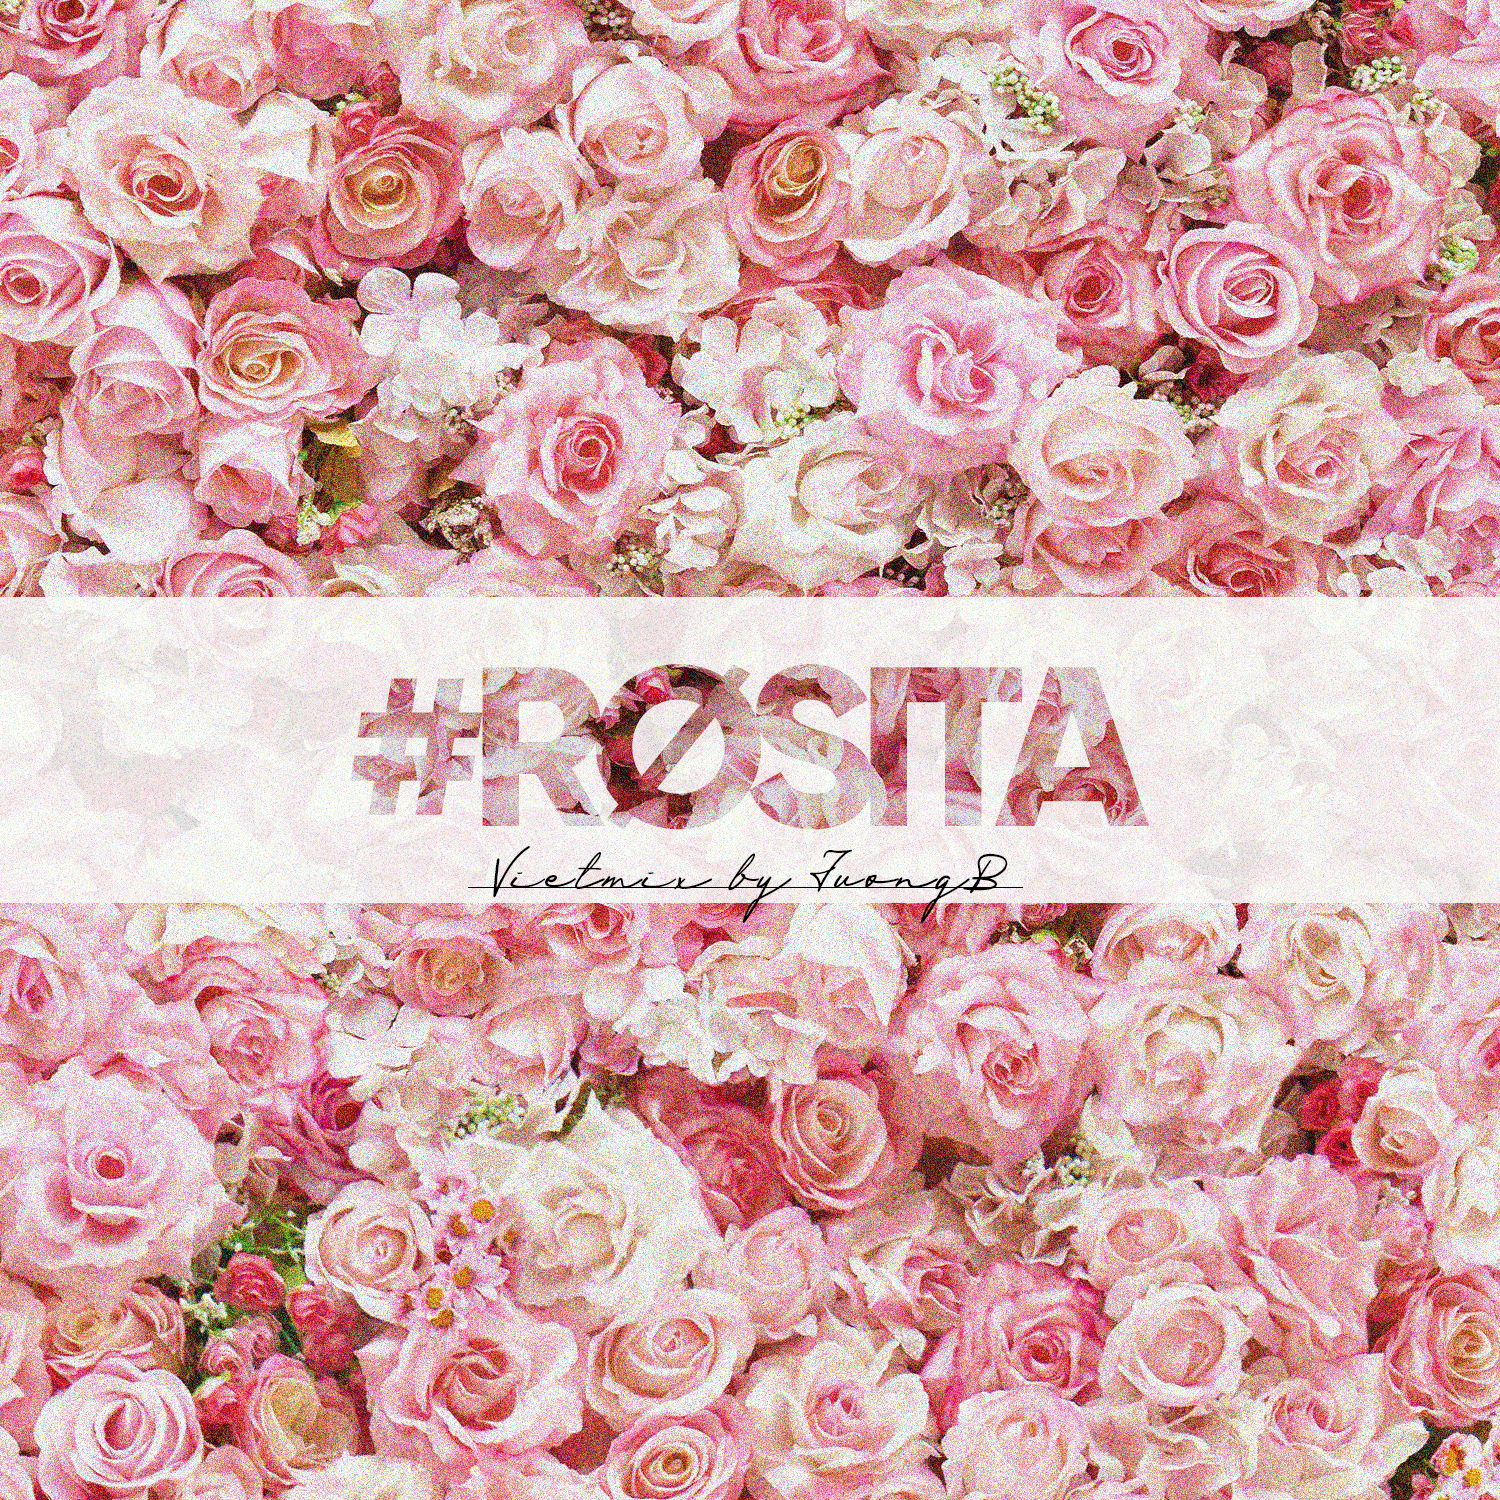 I-download #Rosita - Vietmix By JuongB